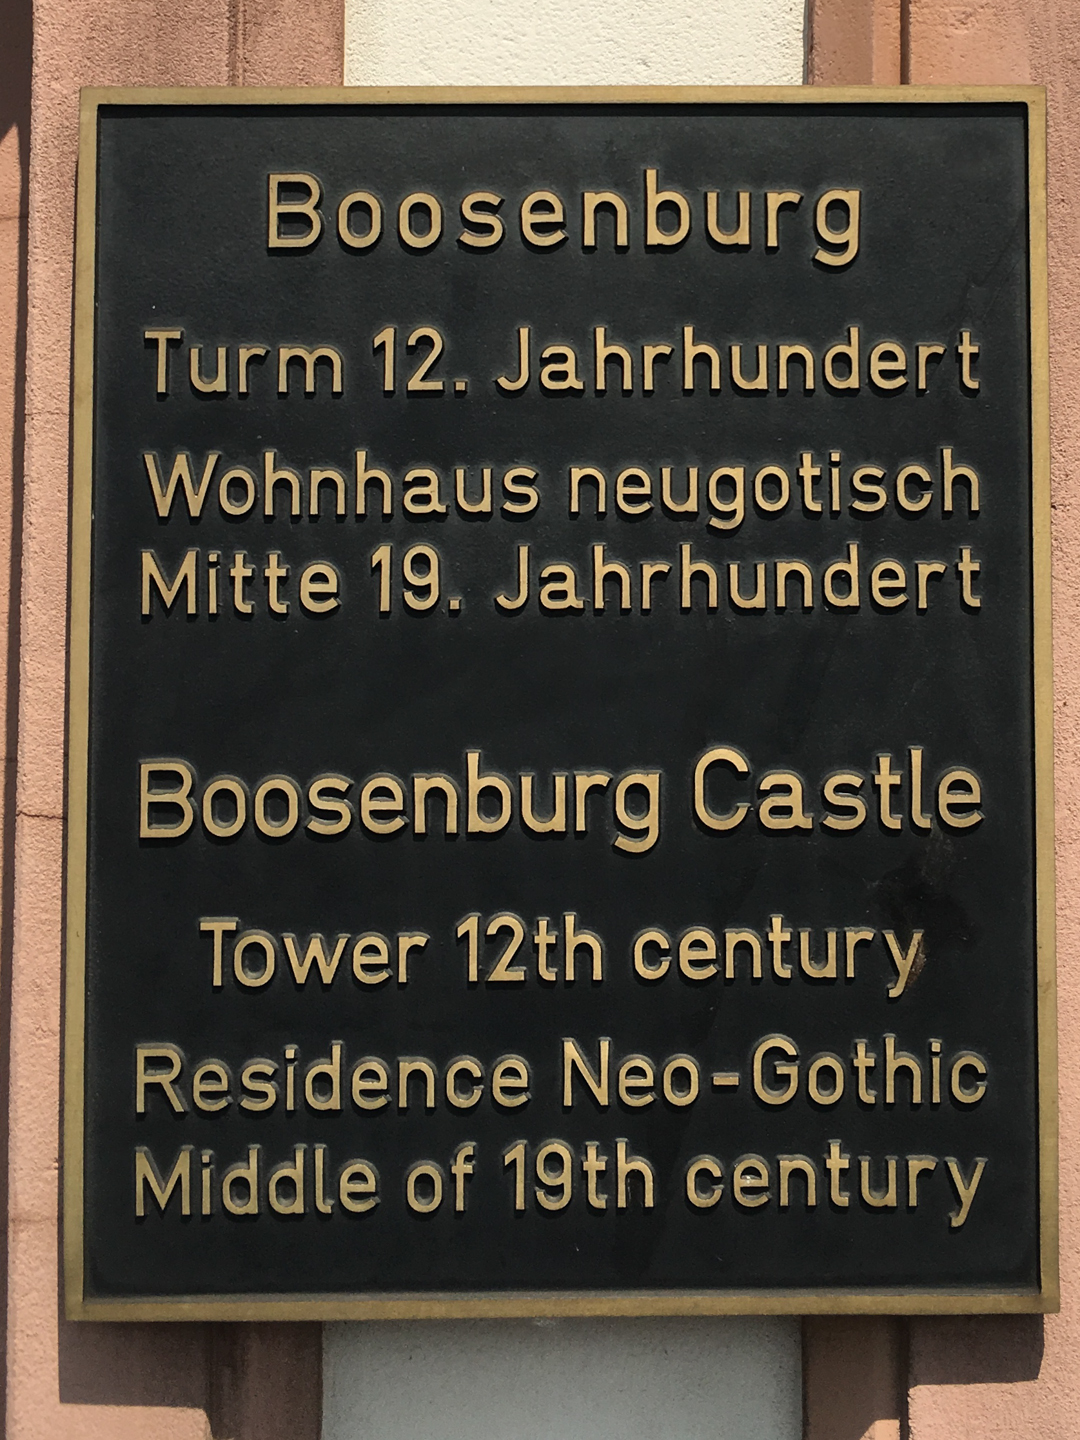 Boosenbug Castle 12 Century Tower... let that sink in a little...